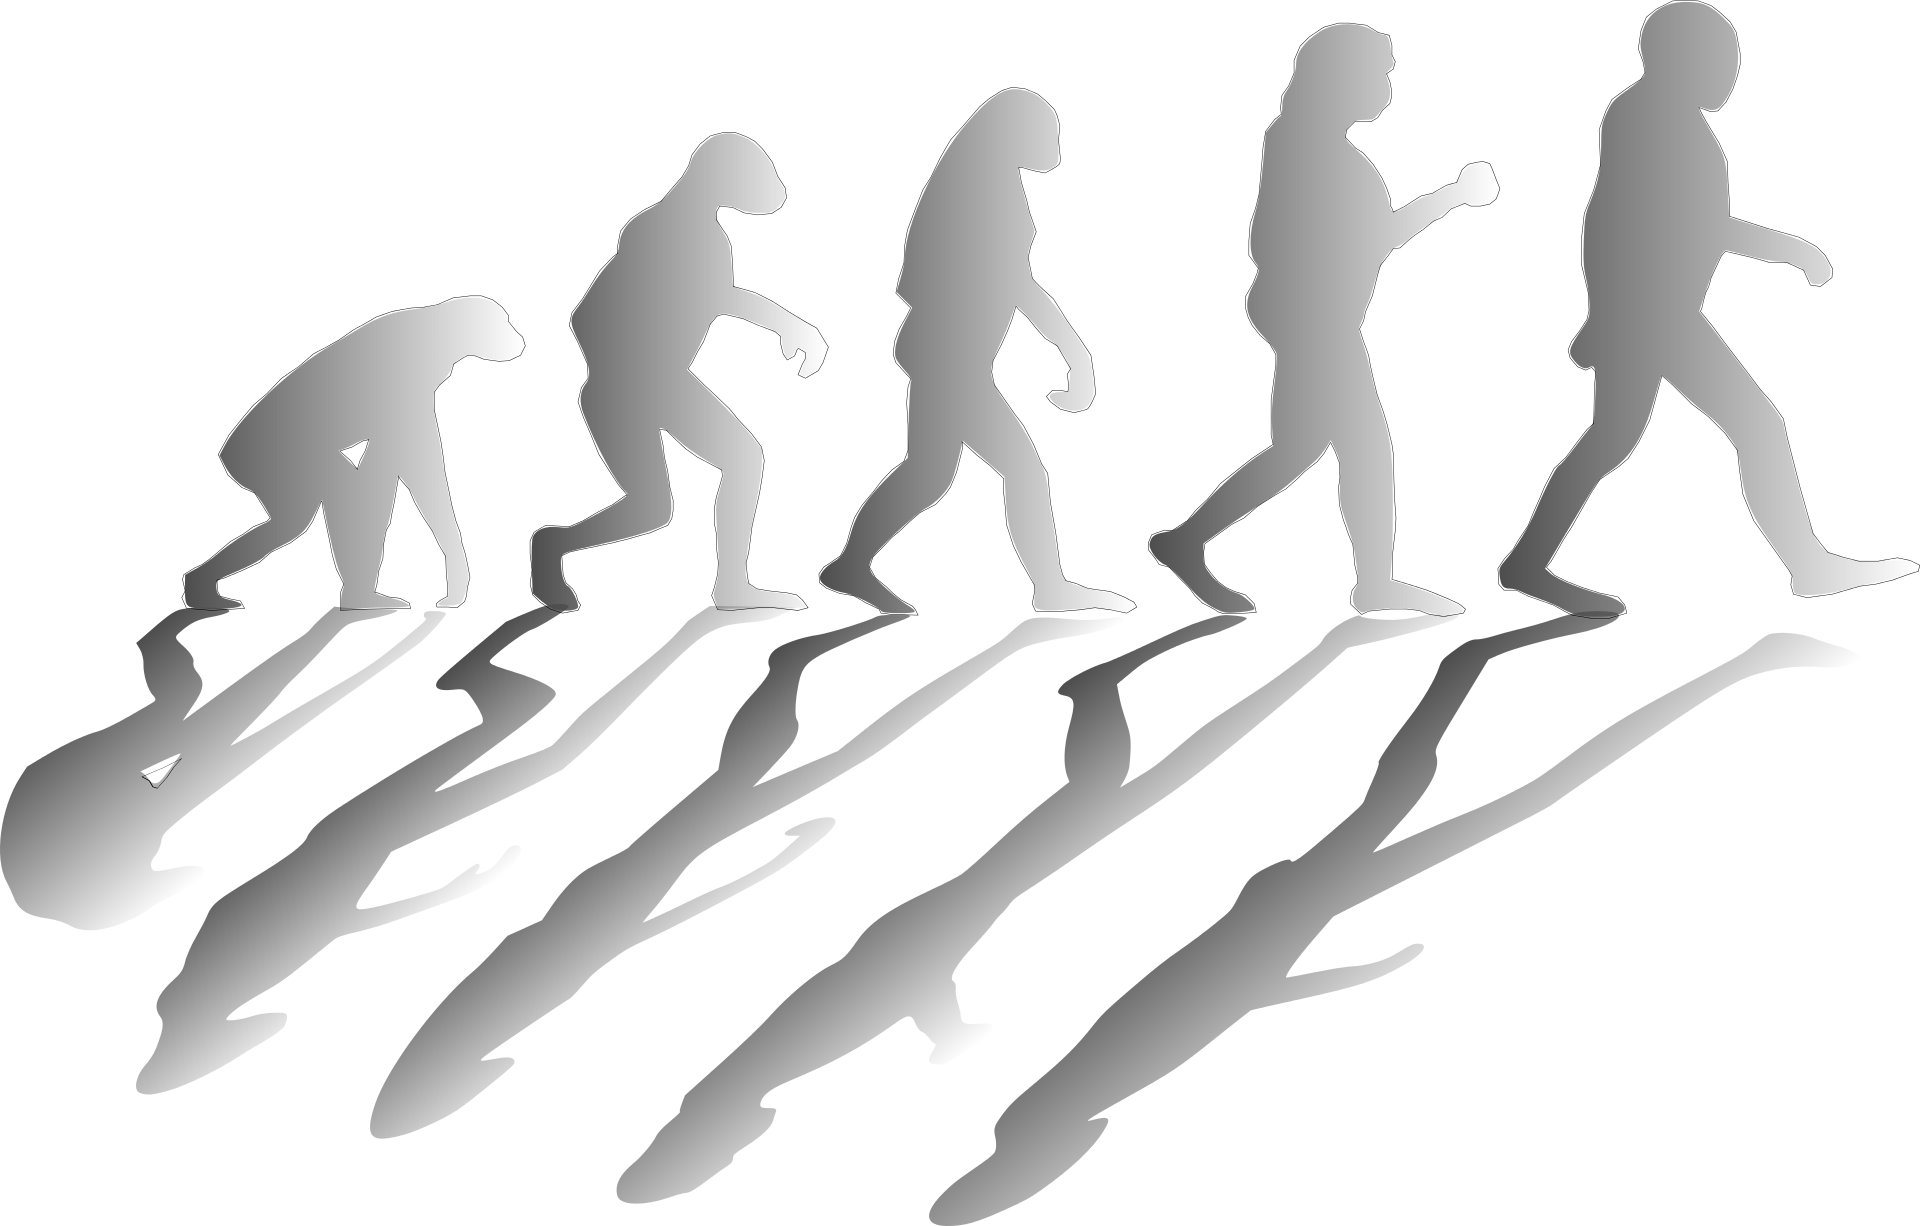 The evolving attitudes of Gen X toward evolution